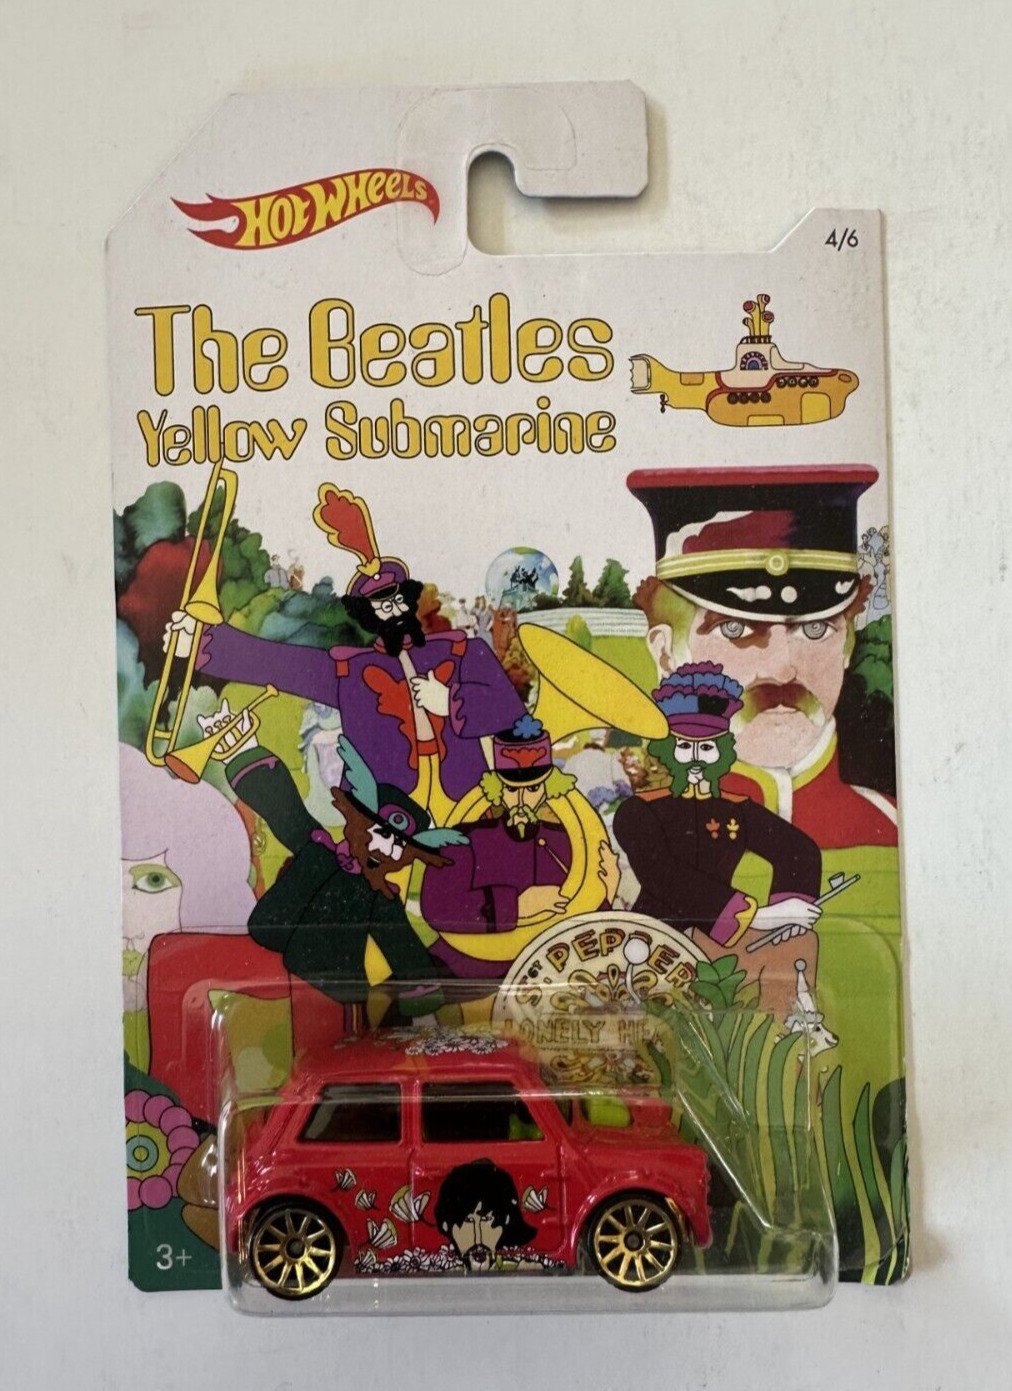 Awesome Hot Wheels The Beatles Yellow Submarine George Harrison Morris Mini 4/6 on eBay